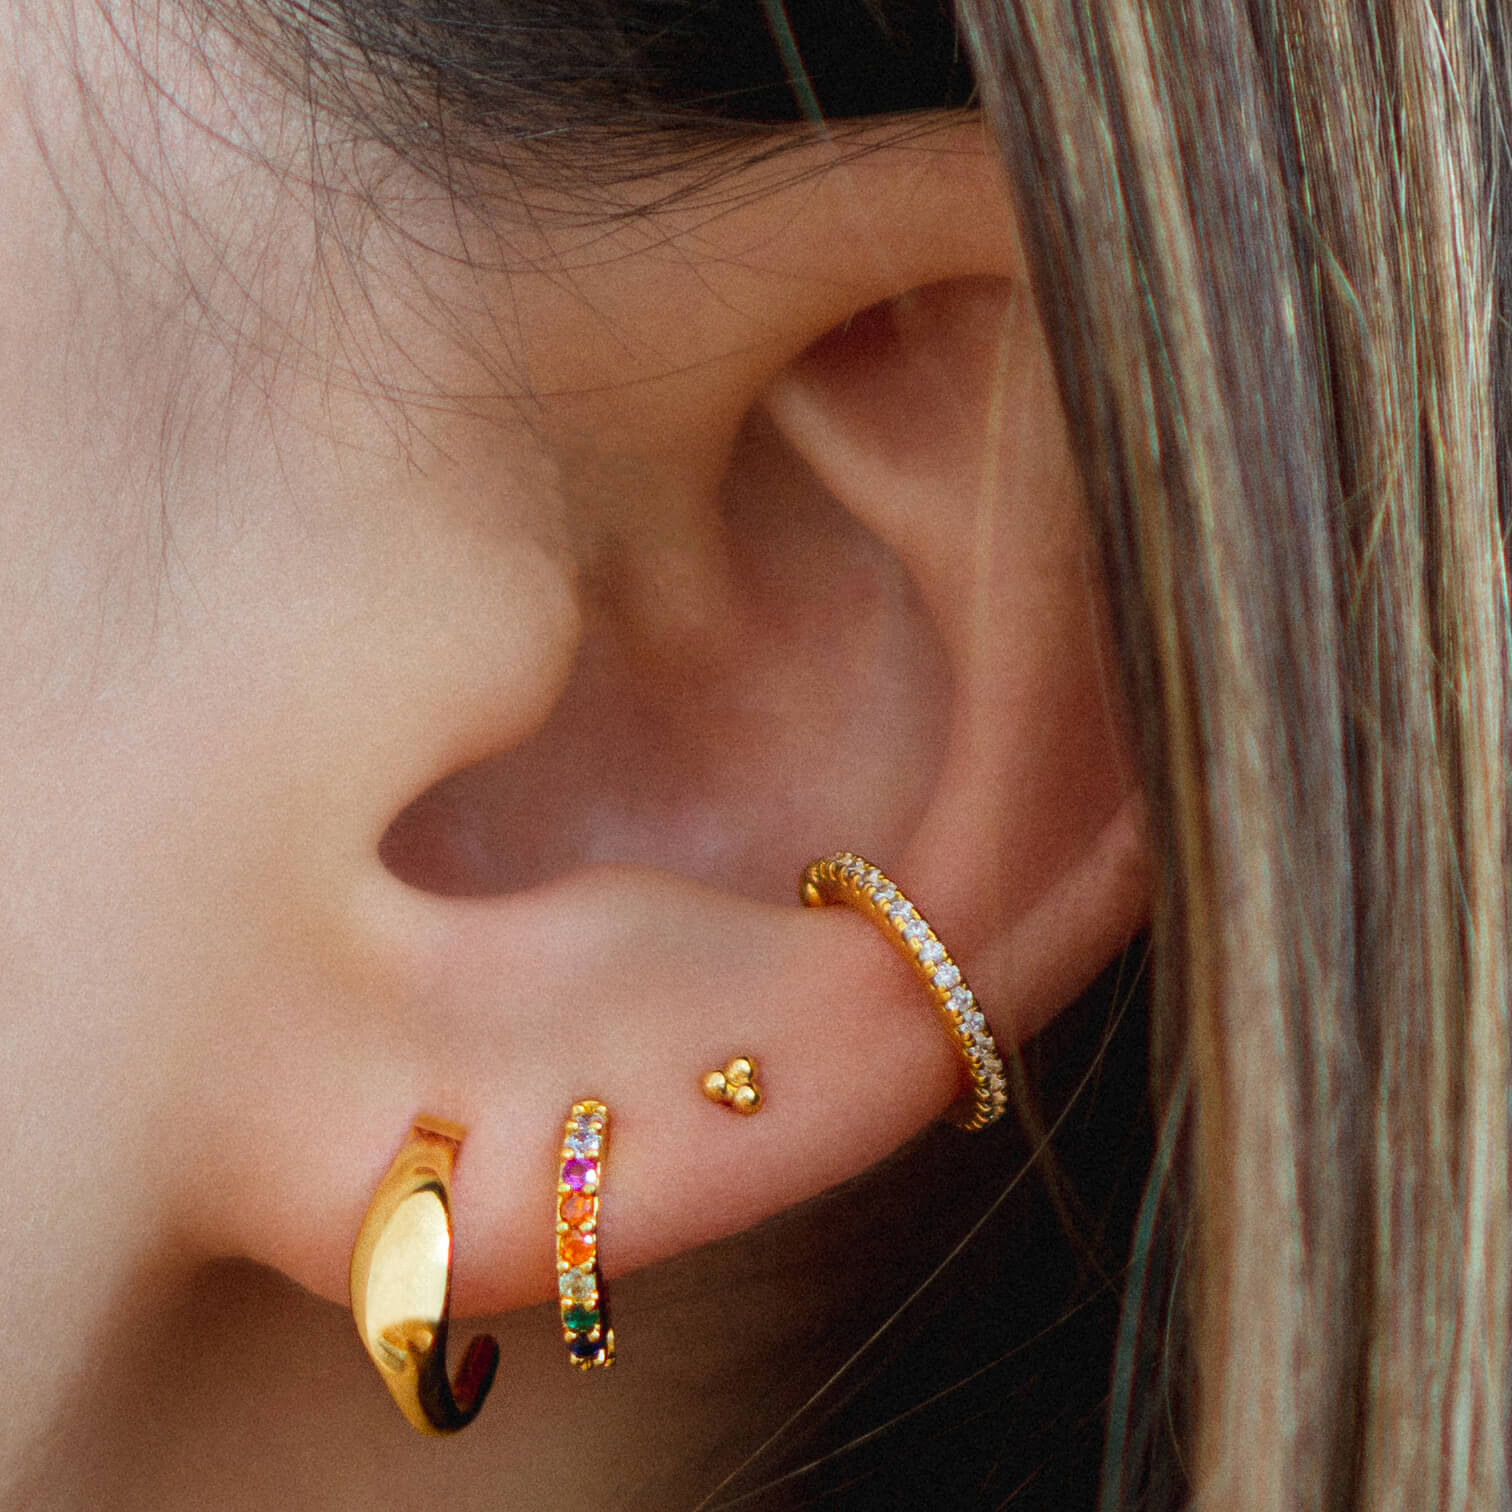 La Tua Luce  Piercing  Single Clicker Earring Gold Cartilage   LaTuaLuceJewelry